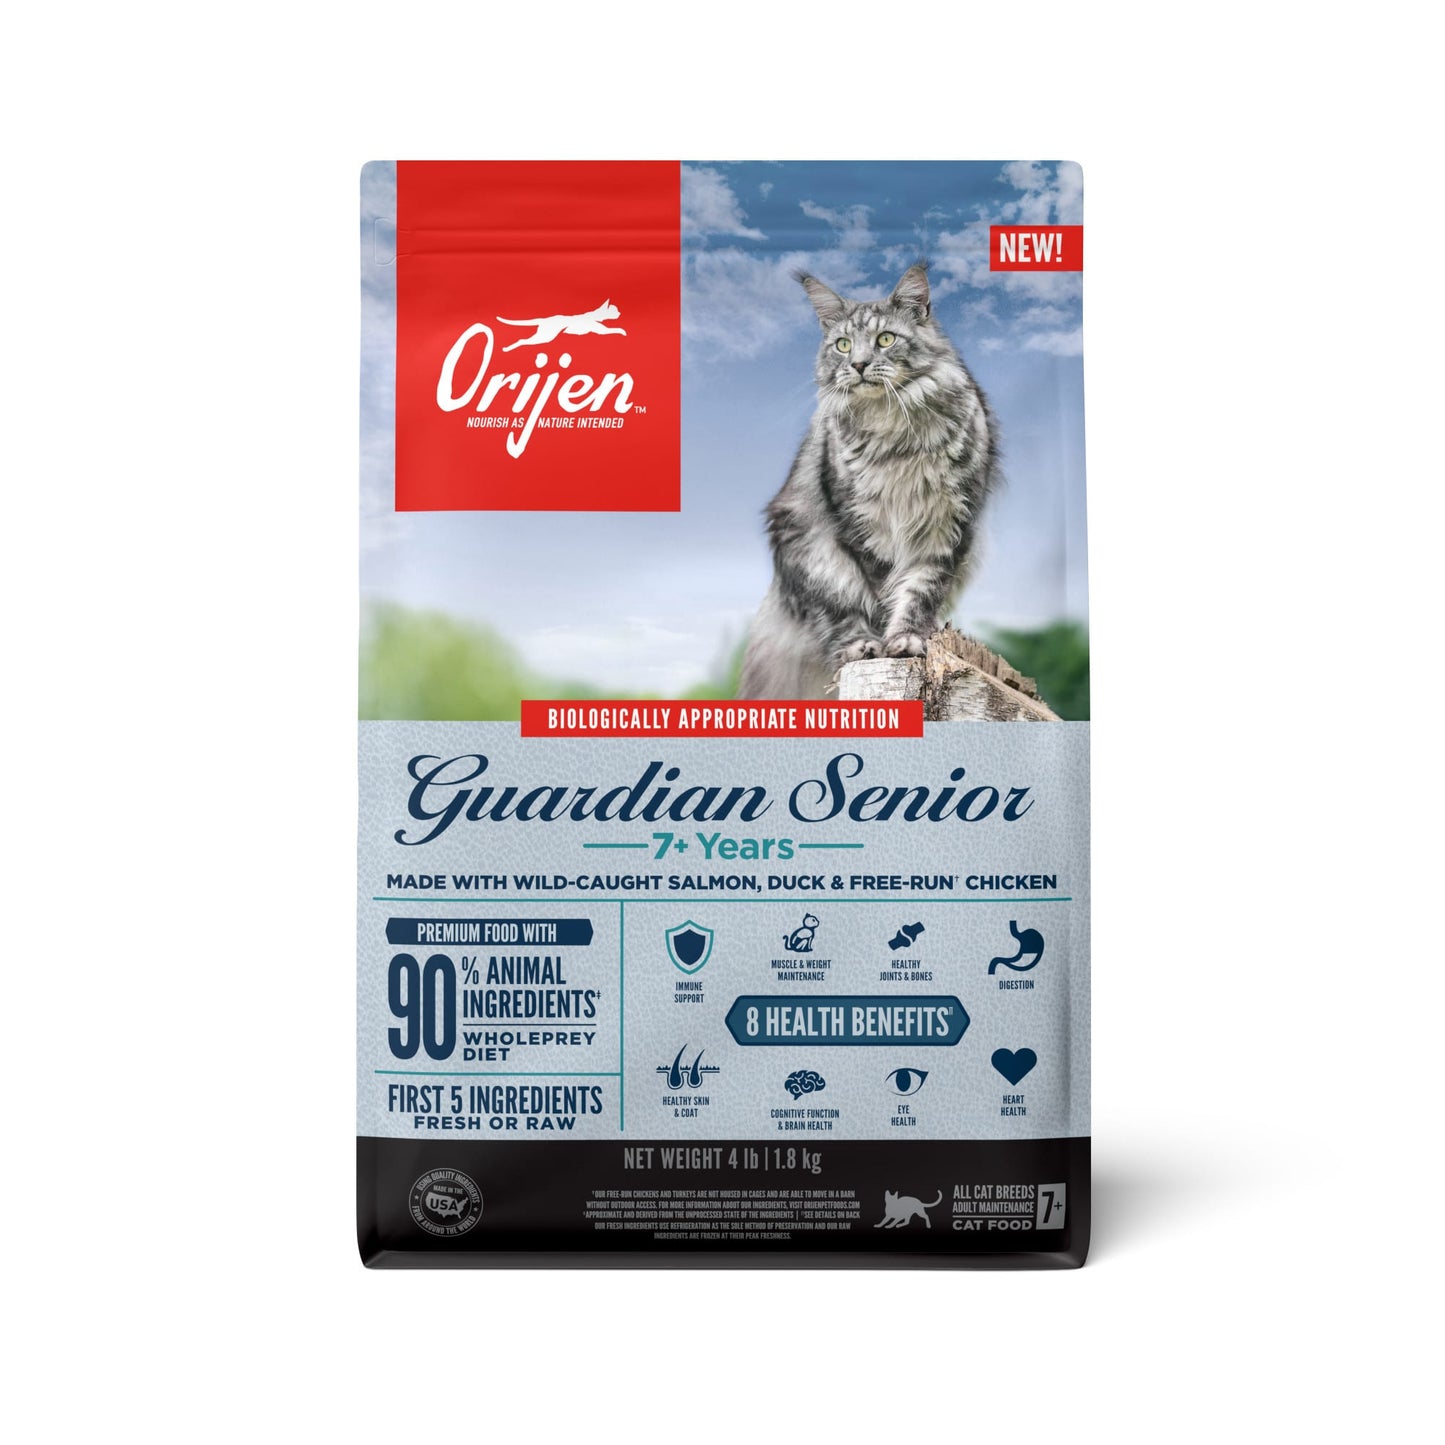 ORIJEN Grain Free Premium High Protein Fresh & Raw Animal Ingredients Guardian Senior Dry Cat Food, 4 lbs.